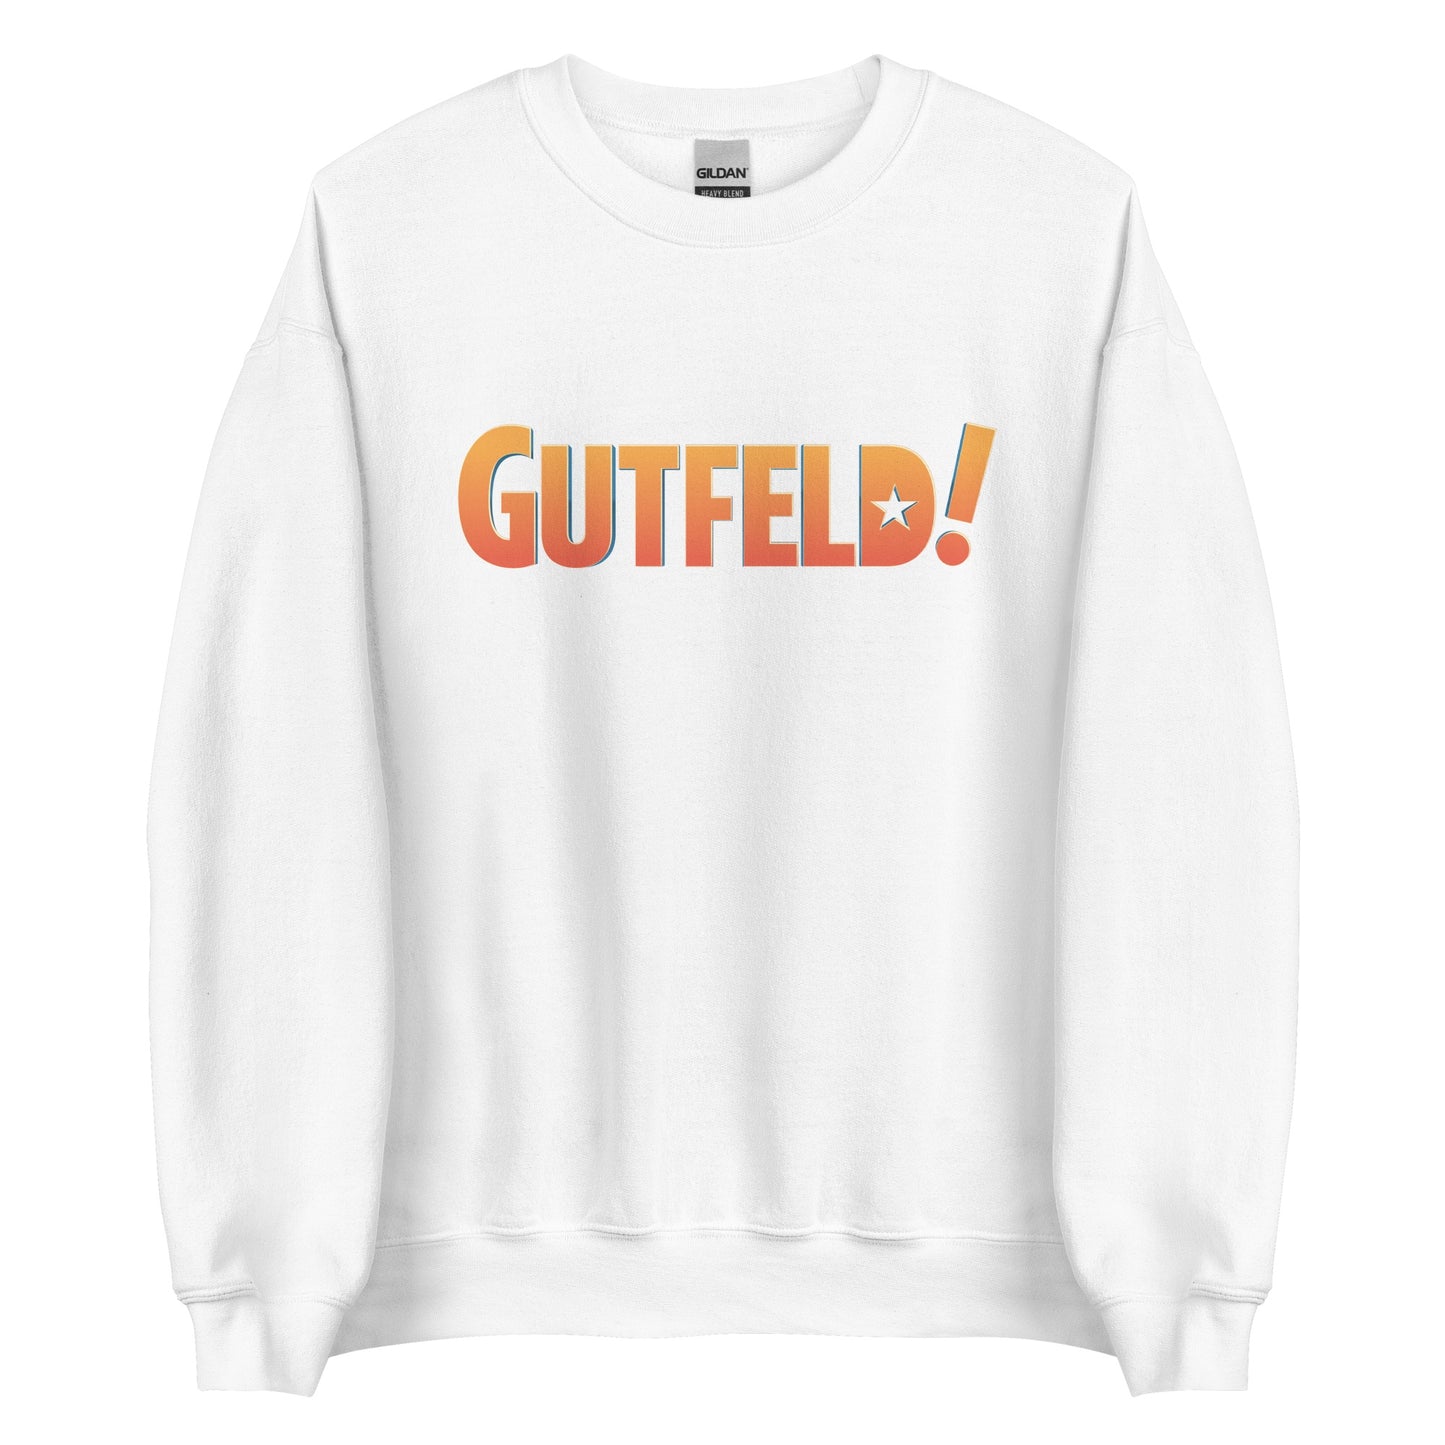 Gutfeld! Logo Unisex Crewneck Sweatshirt